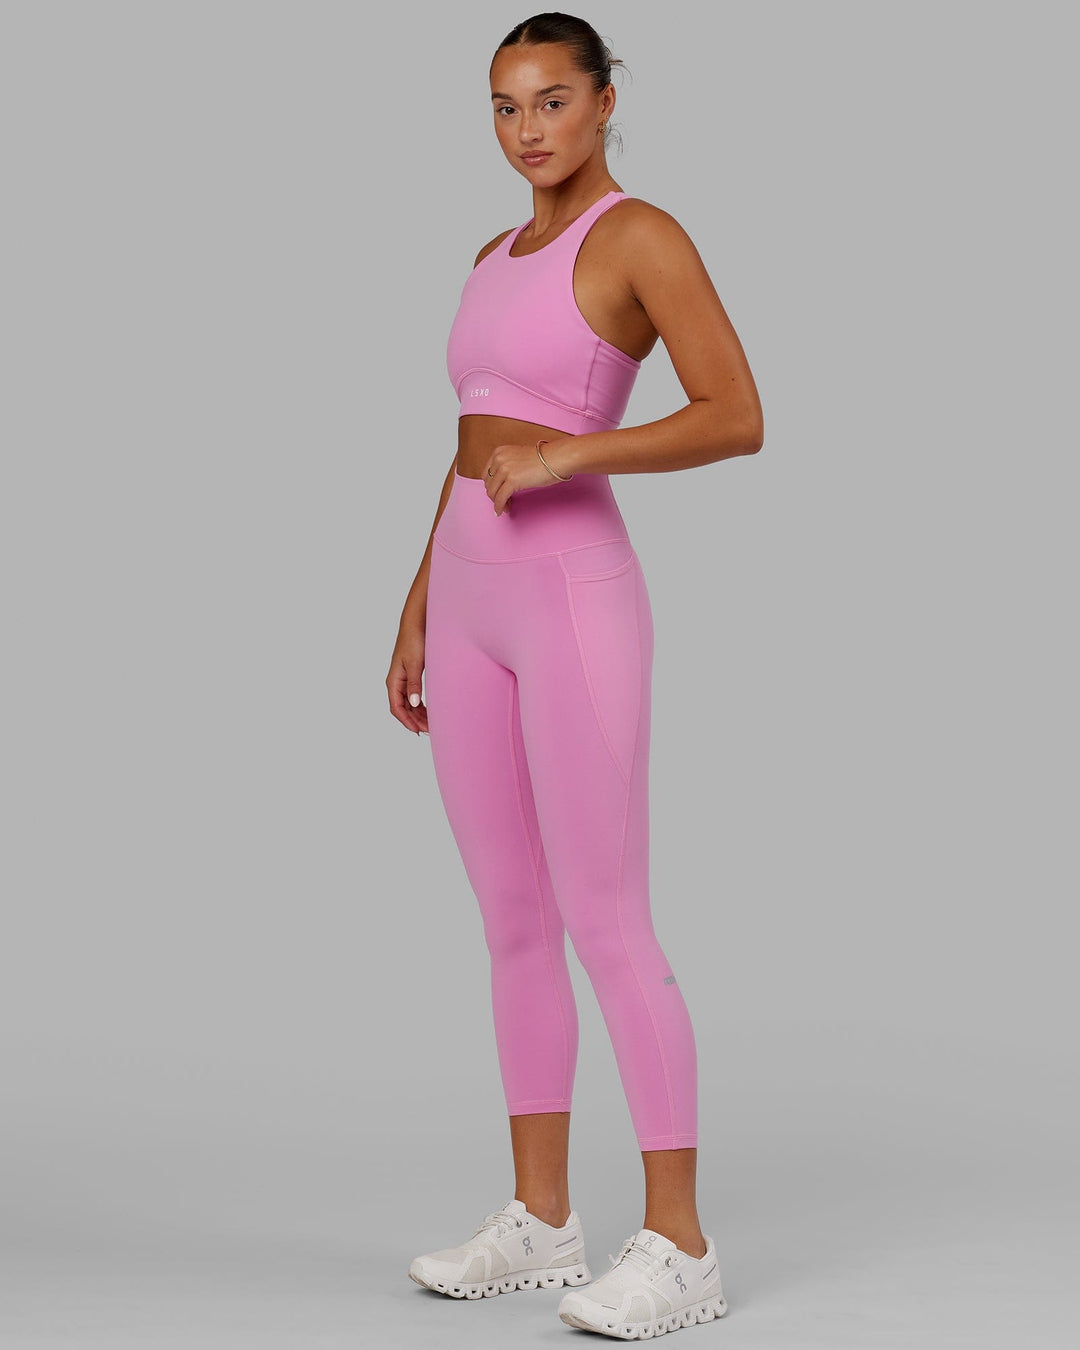 Fusion 7/8 Length Leggings - Spark Pink